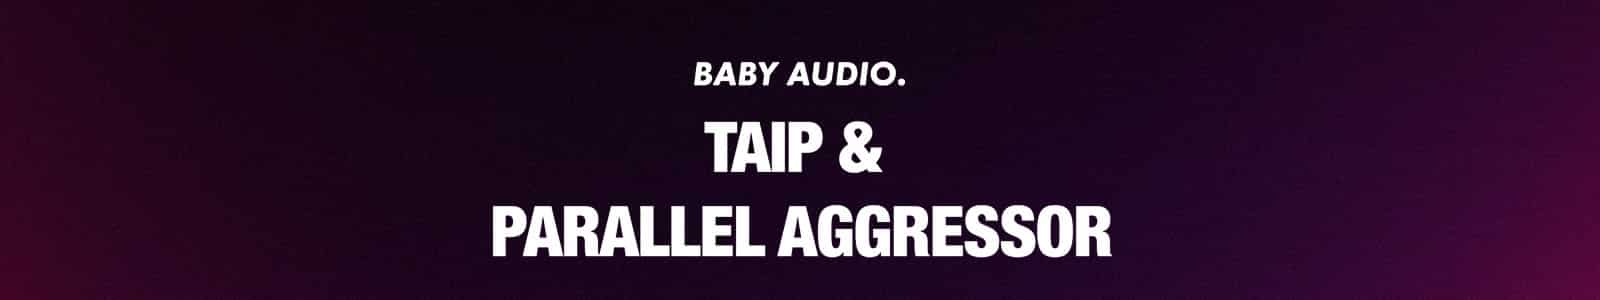 Baby Audio Parallel Aggressor & TAIP Bundle